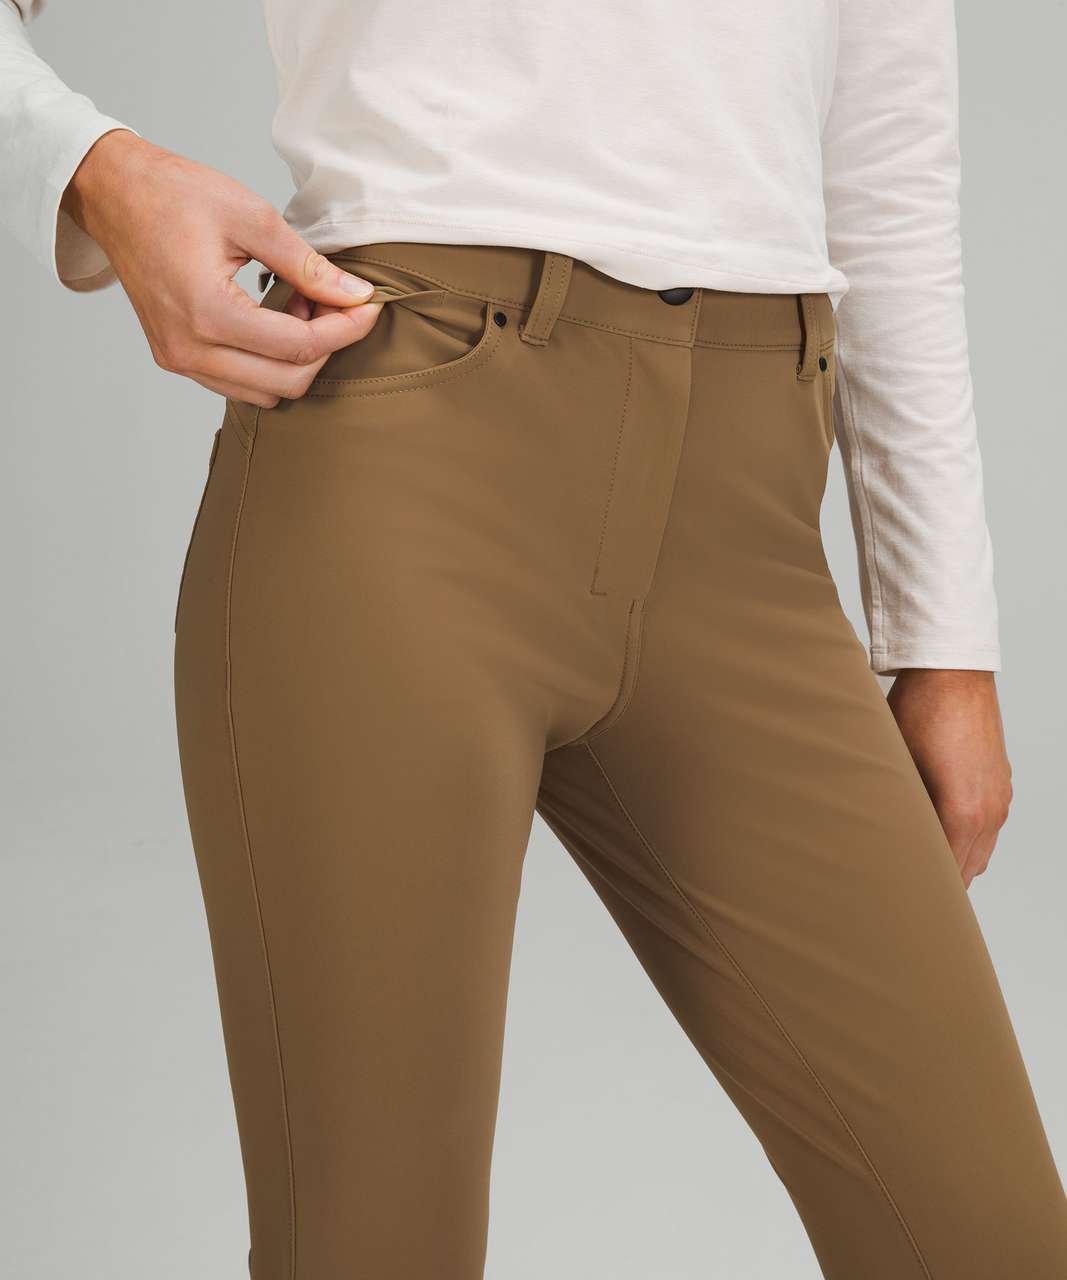 Lululemon City Sleek Slim-Fit 5 Pocket High-Rise Pants - ShopStyle